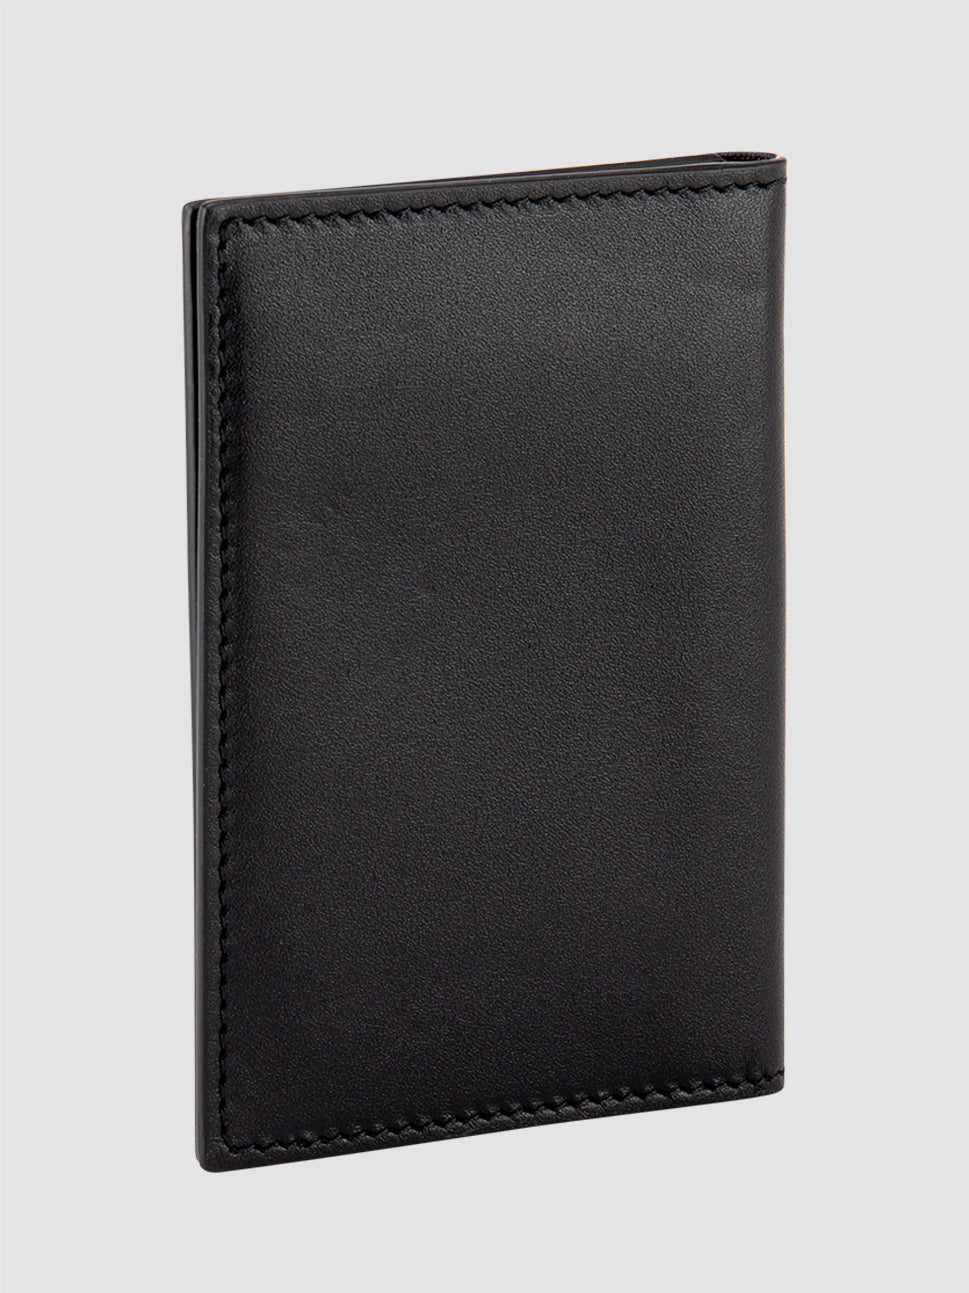 Balr BT Leather Card Holder Black B10019